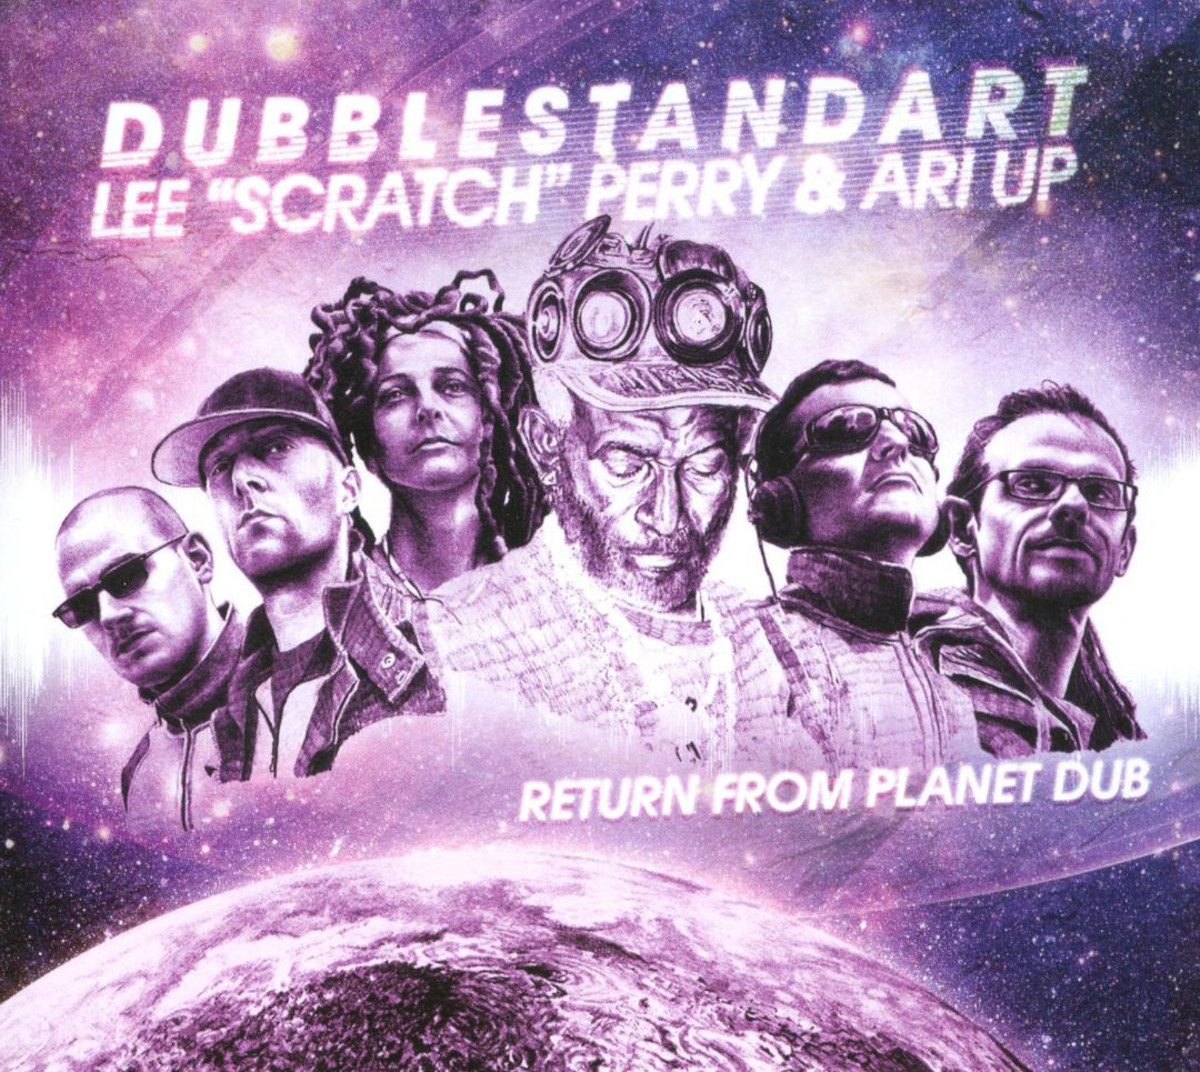 Dubblestandart : Lee “Scratch" Perry & Ari Up – Return from Planet Dub